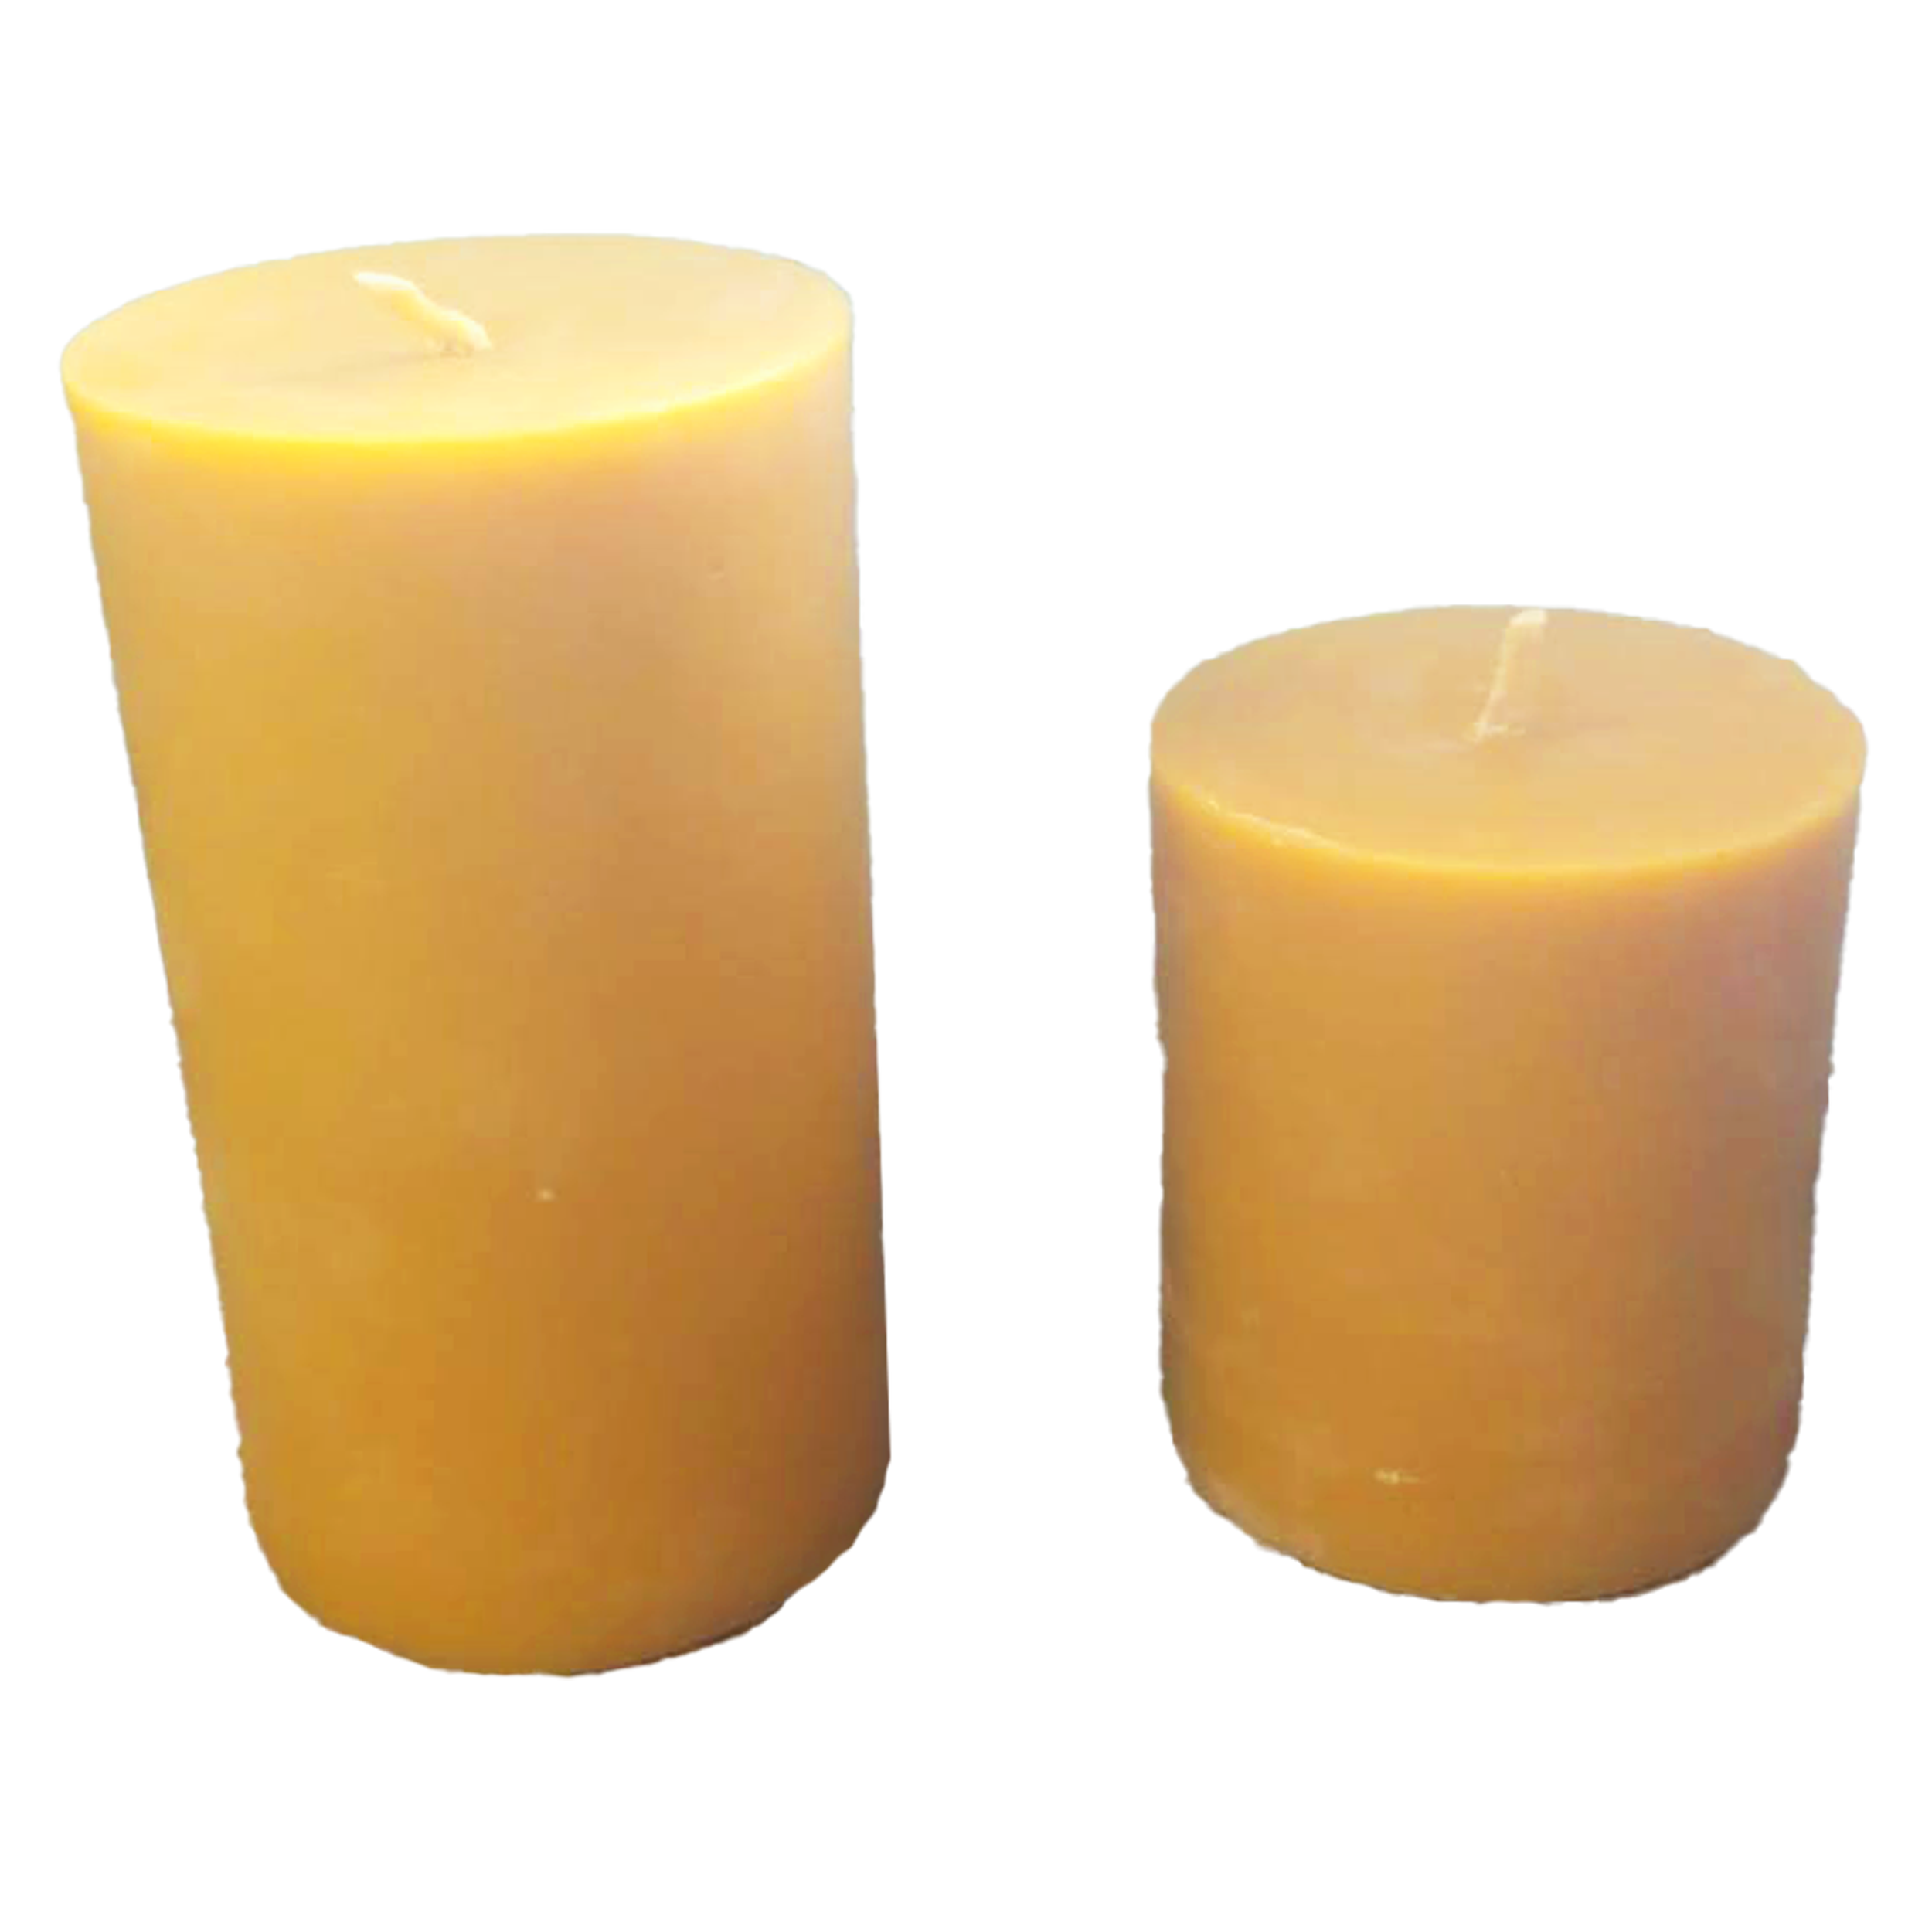 large and small pure nova scotia beeswax pillar candles